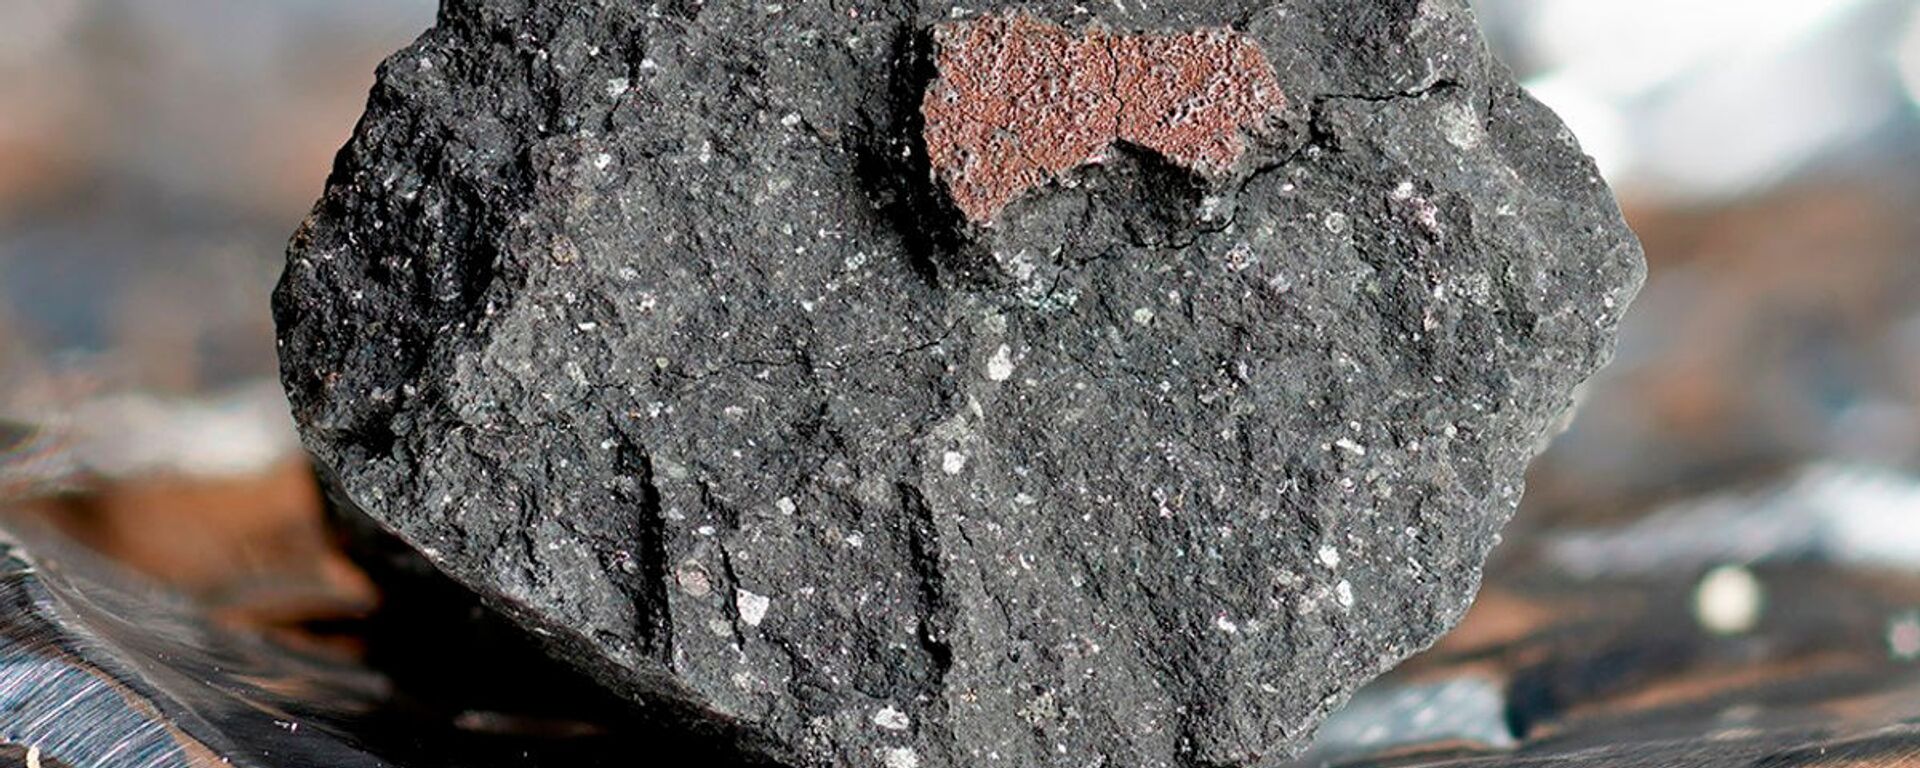 Fragmento do meteorito descoberto na cidade de Winchcombe, Reino Unido - Sputnik Brasil, 1920, 27.10.2022